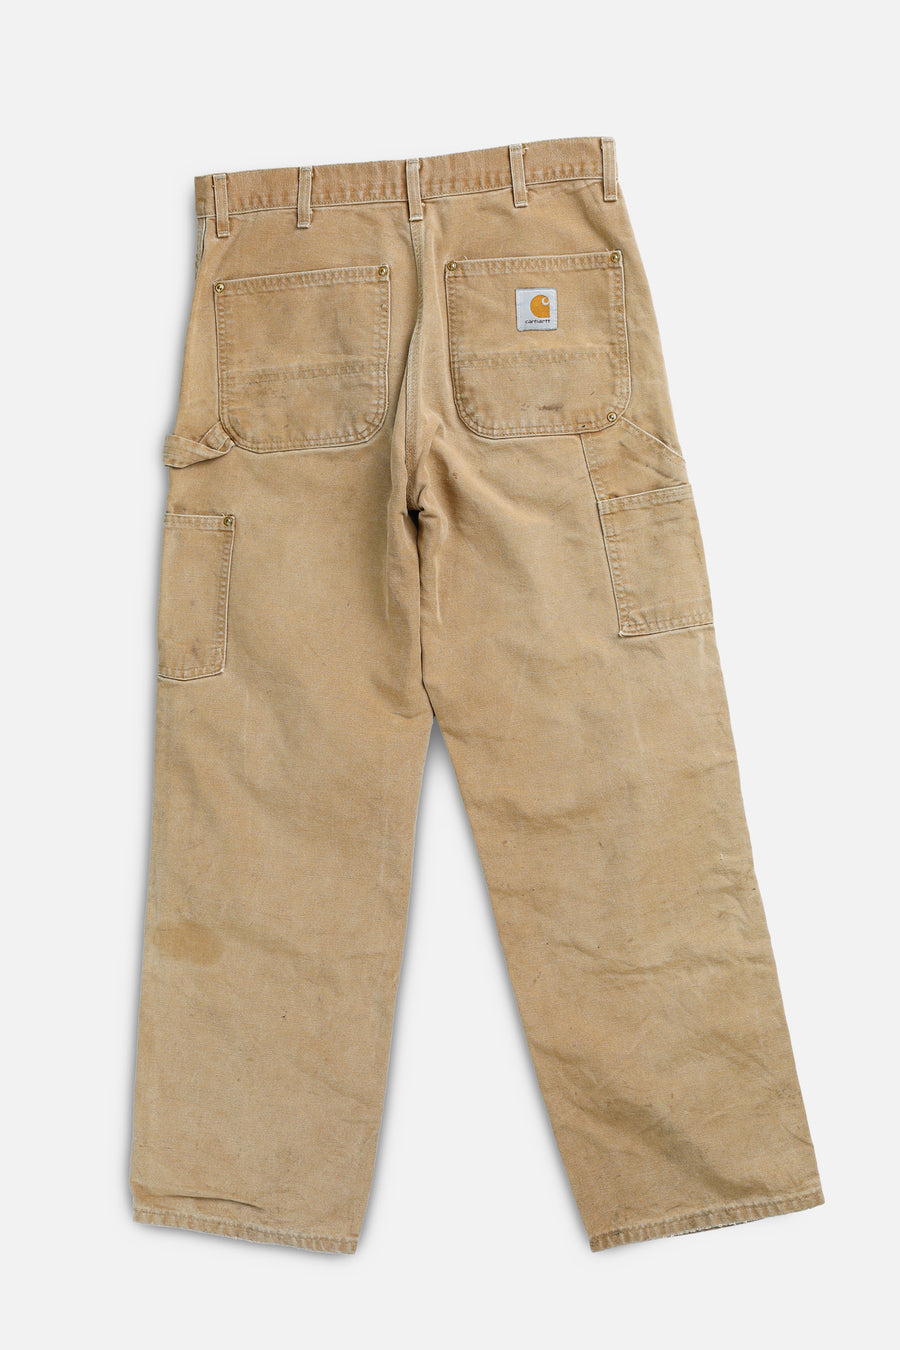 Vintage Carhartt Pants - W34